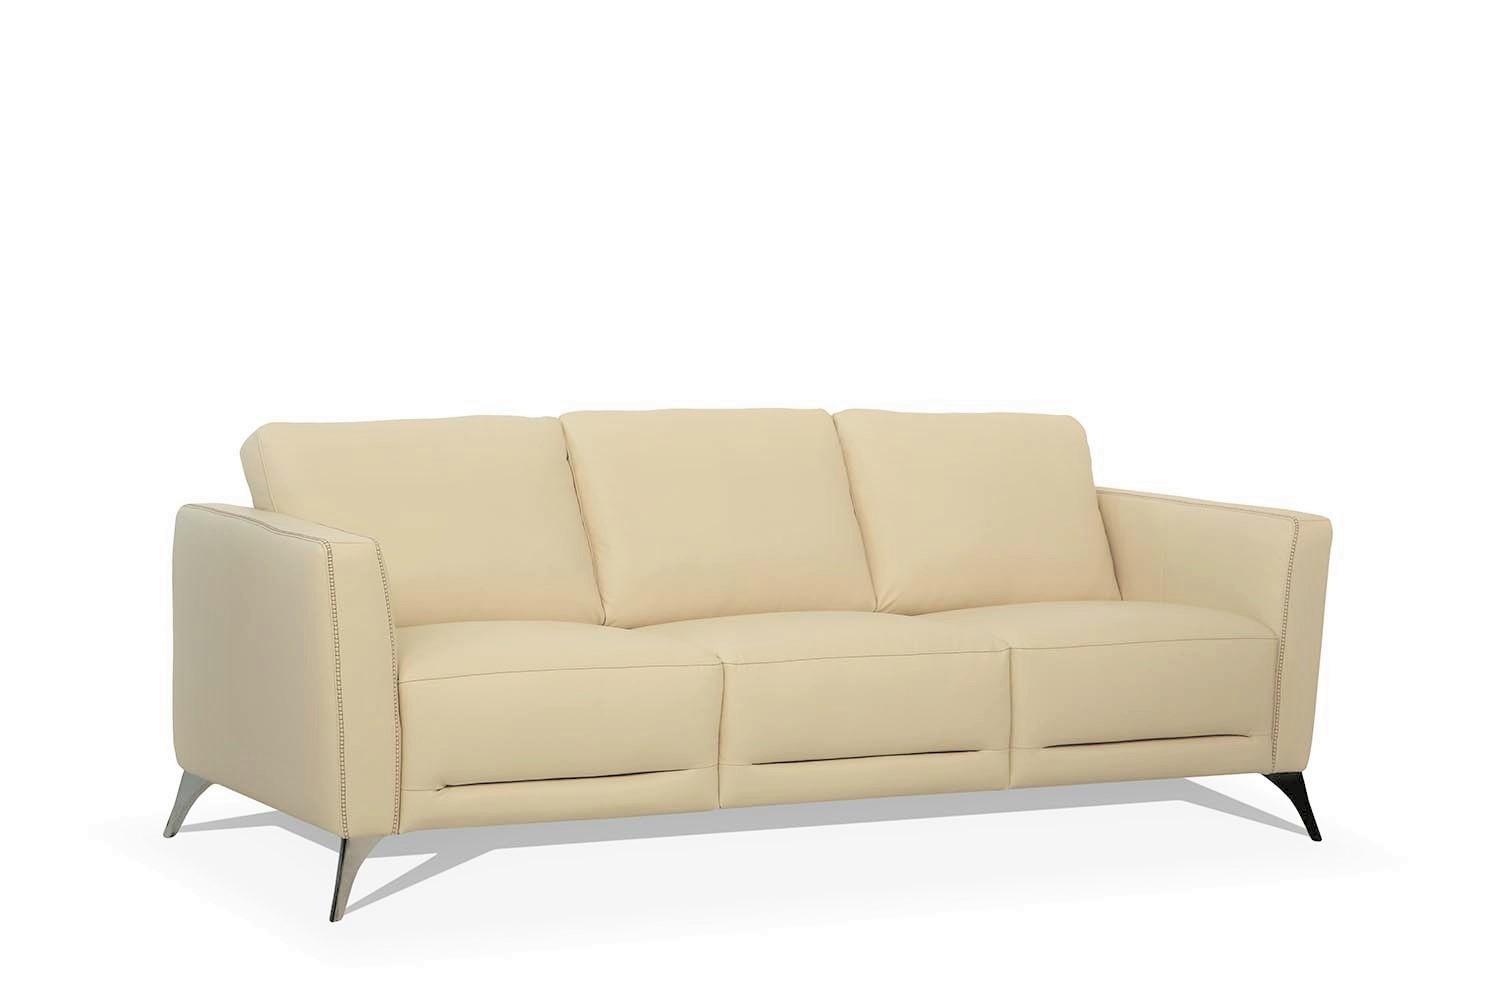 

    
Transitional Cream Leather Sofa by Acme Malaga 55005
